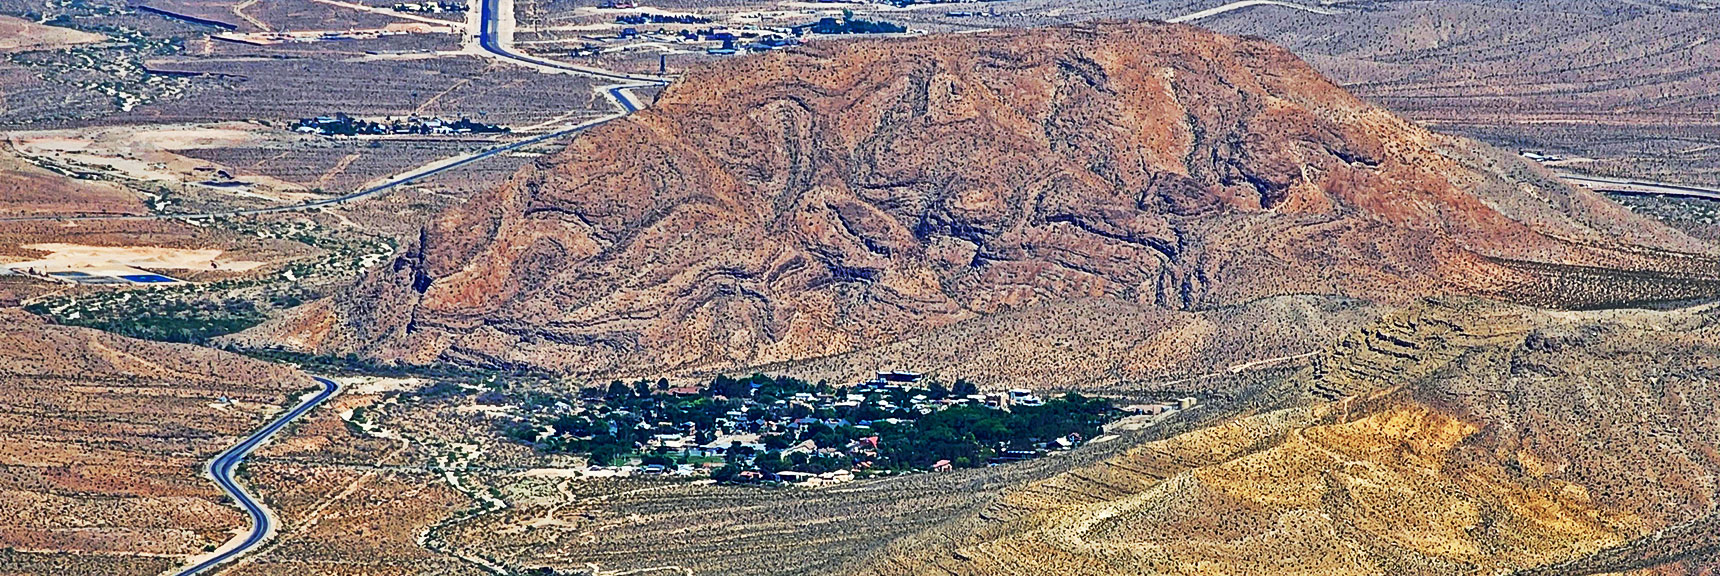 Town of Blue Diamond from Indecision Peak Canyon | Mt Wilson to Hidden Peak | Upper Crest Ridgeline | Rainbow Mountain Wilderness, Nevada